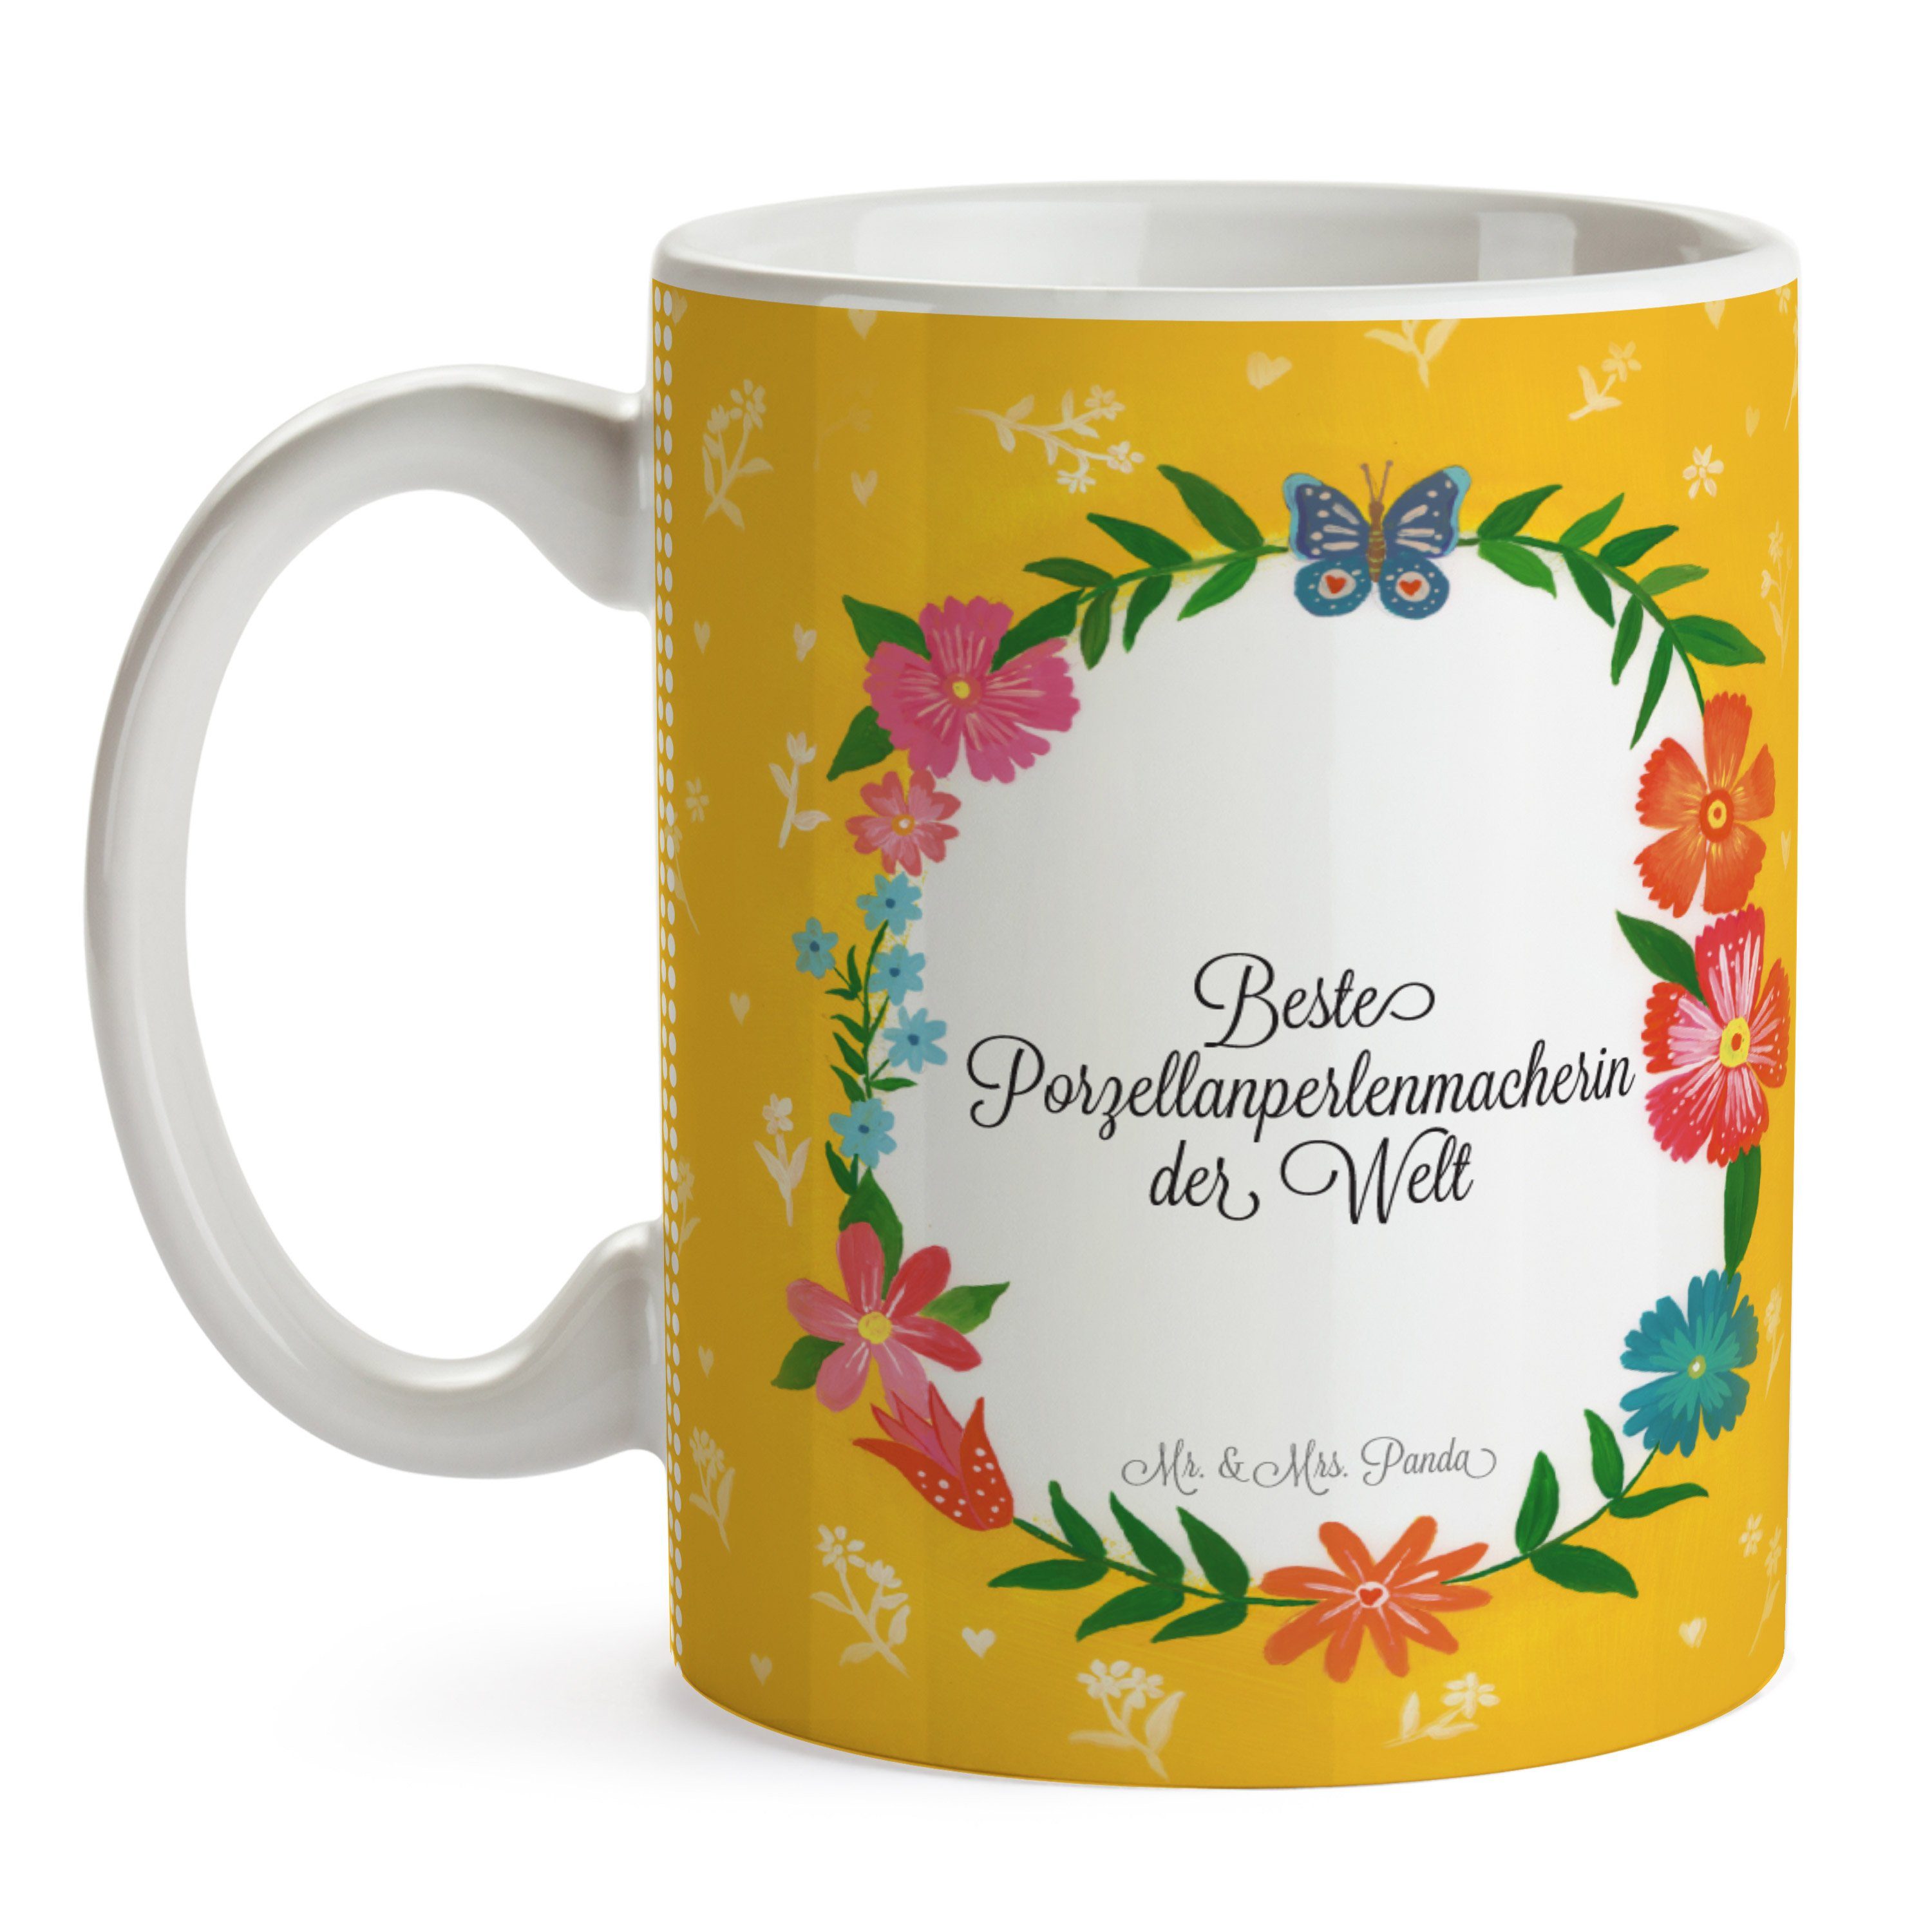 Mr. & Mrs. Panda Tasse - Büro Geschenk, Ges, Keramik Berufsausbildung, Porzellanperlenmacherin Tasse